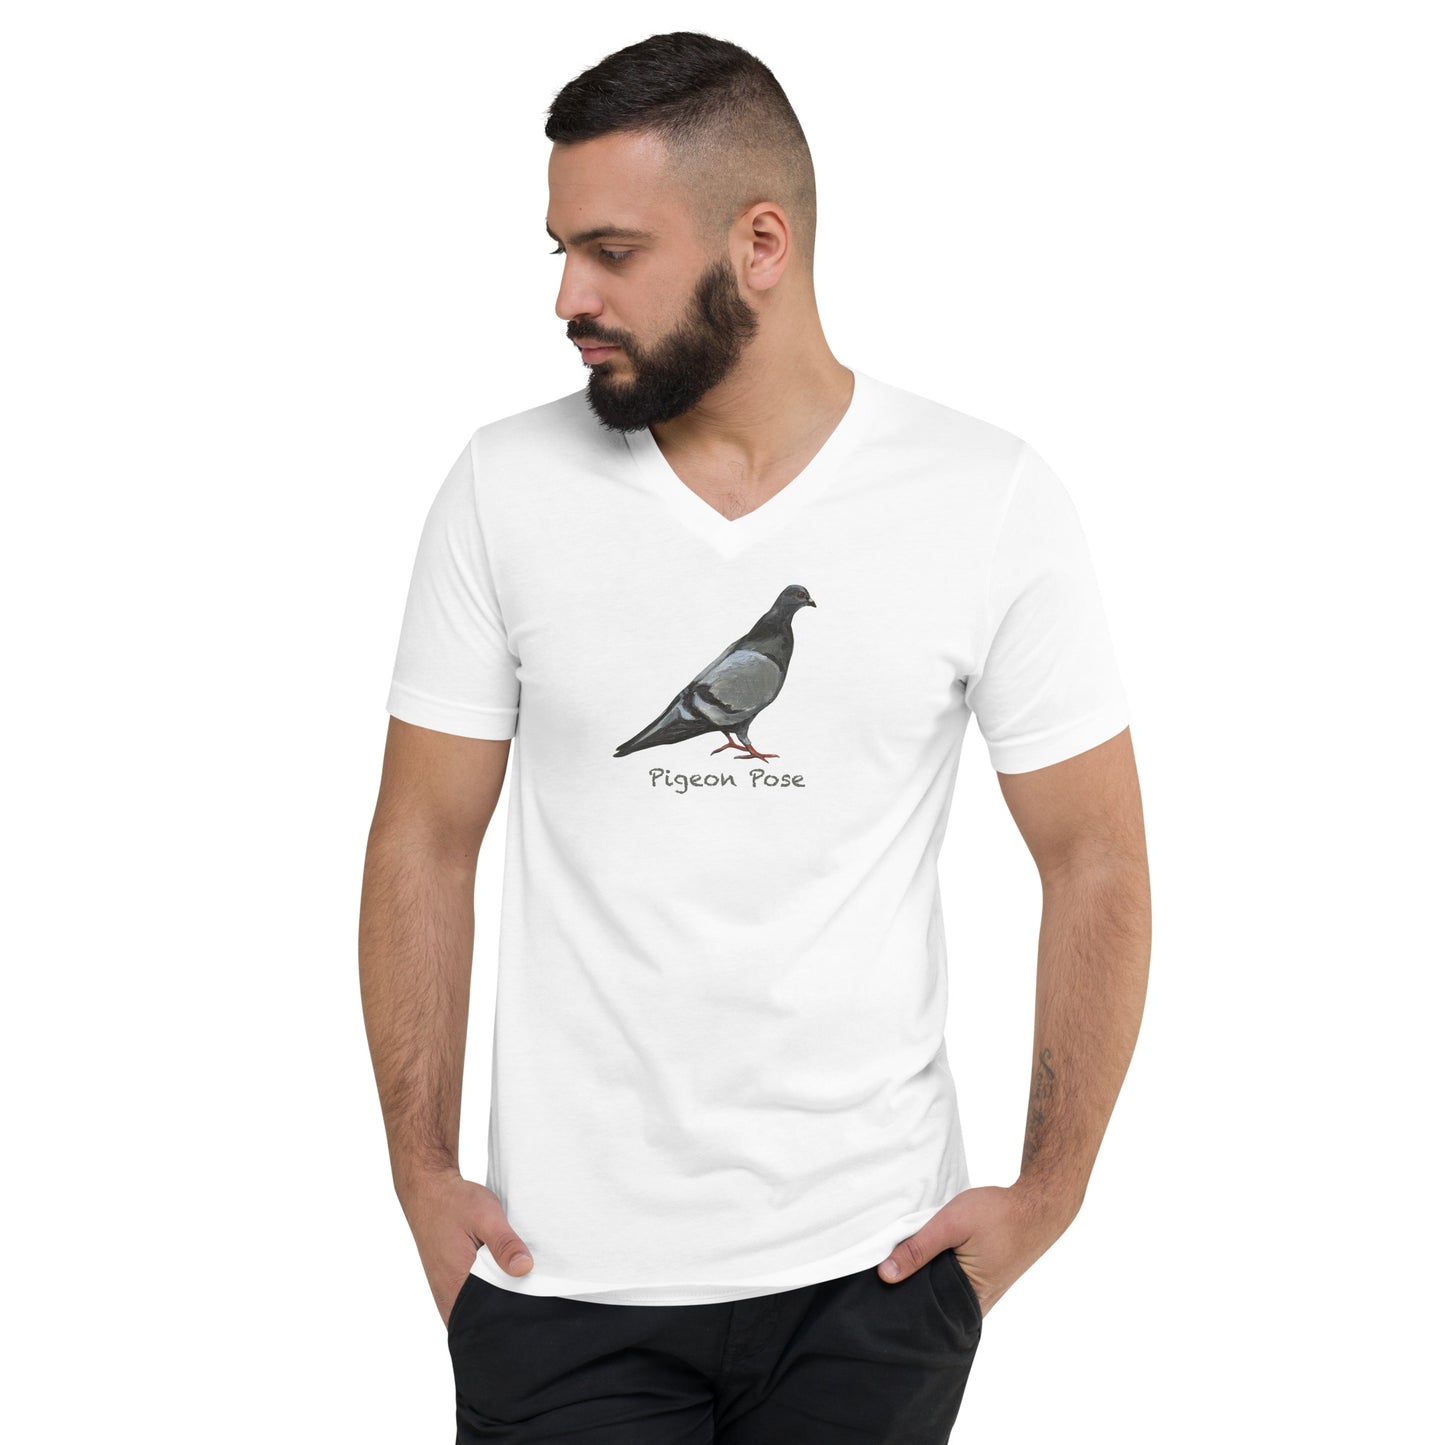 Unisex Short Sleeve V-Neck T-Shirt - Yoga Pigeon Pose Design